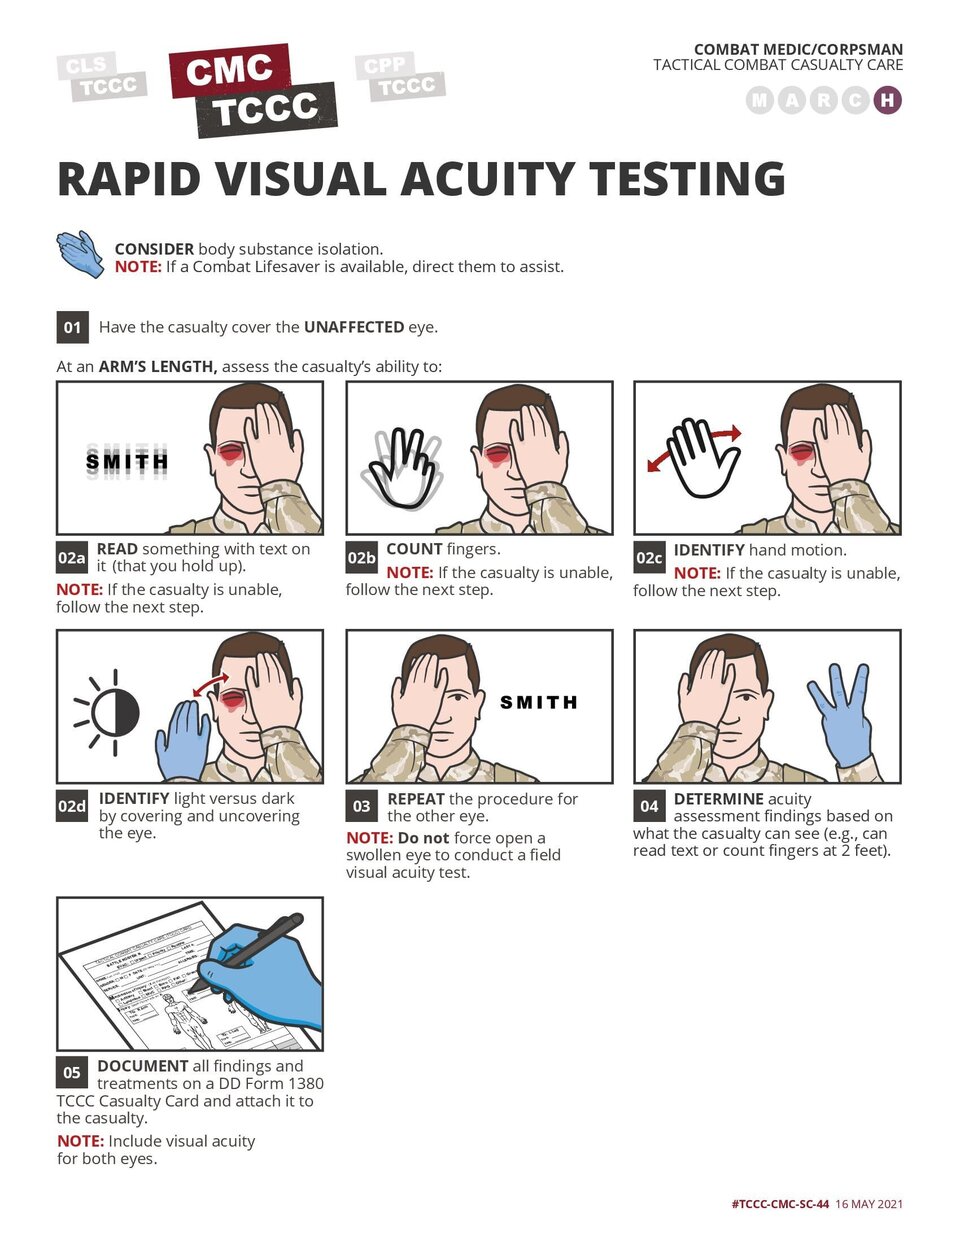 Rapid Field Visual Acuity Testing